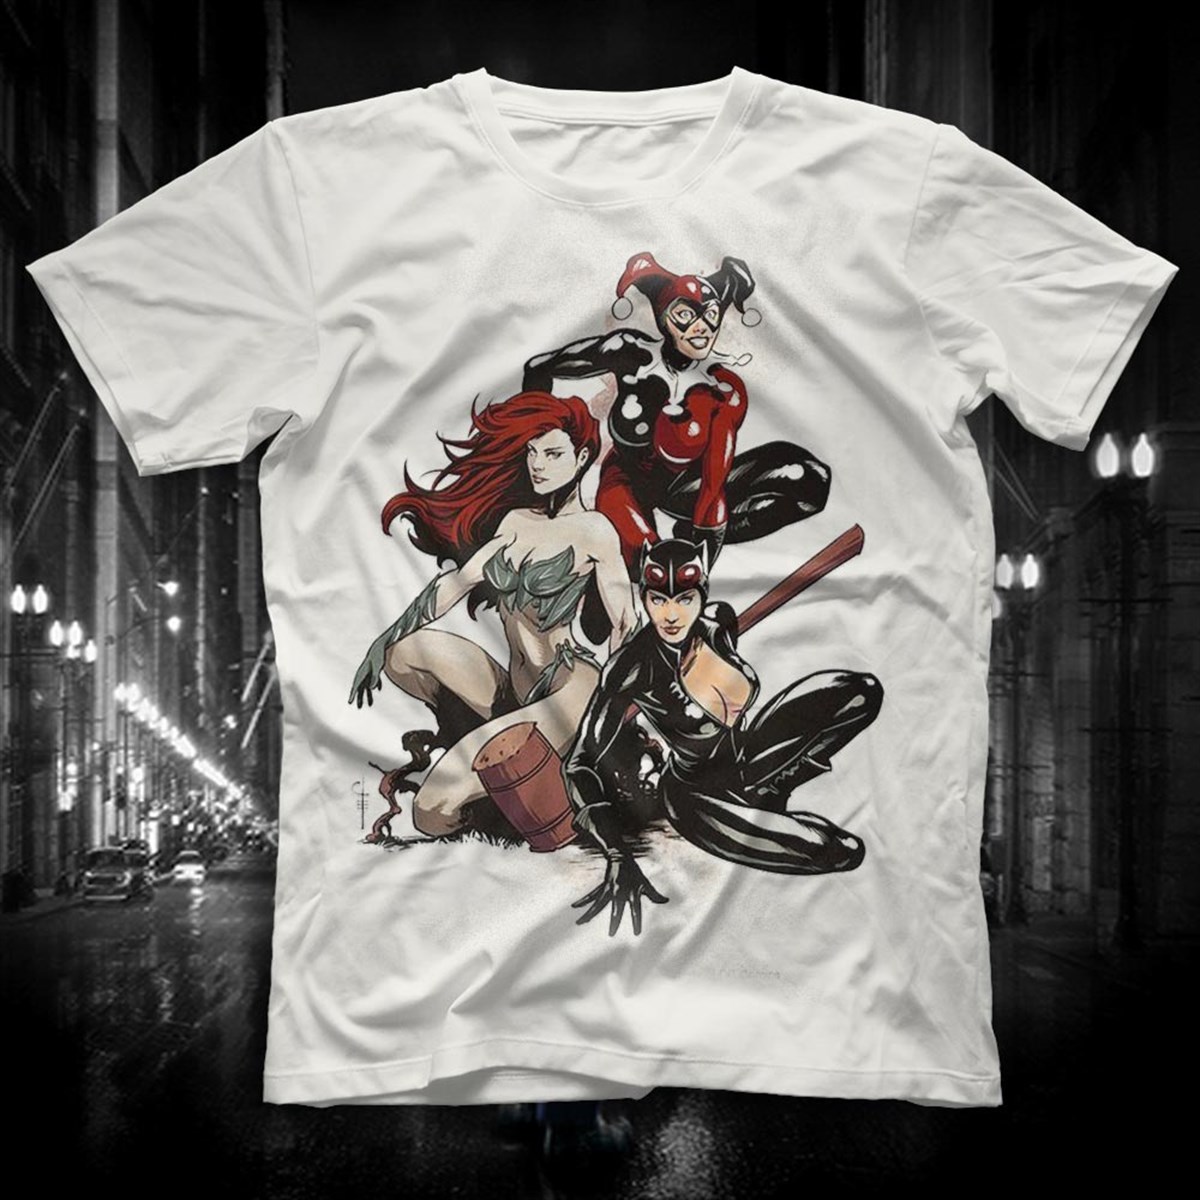 Gotham City Sirens T shirt,Cartoon,Comics,Anime Tshirt 04